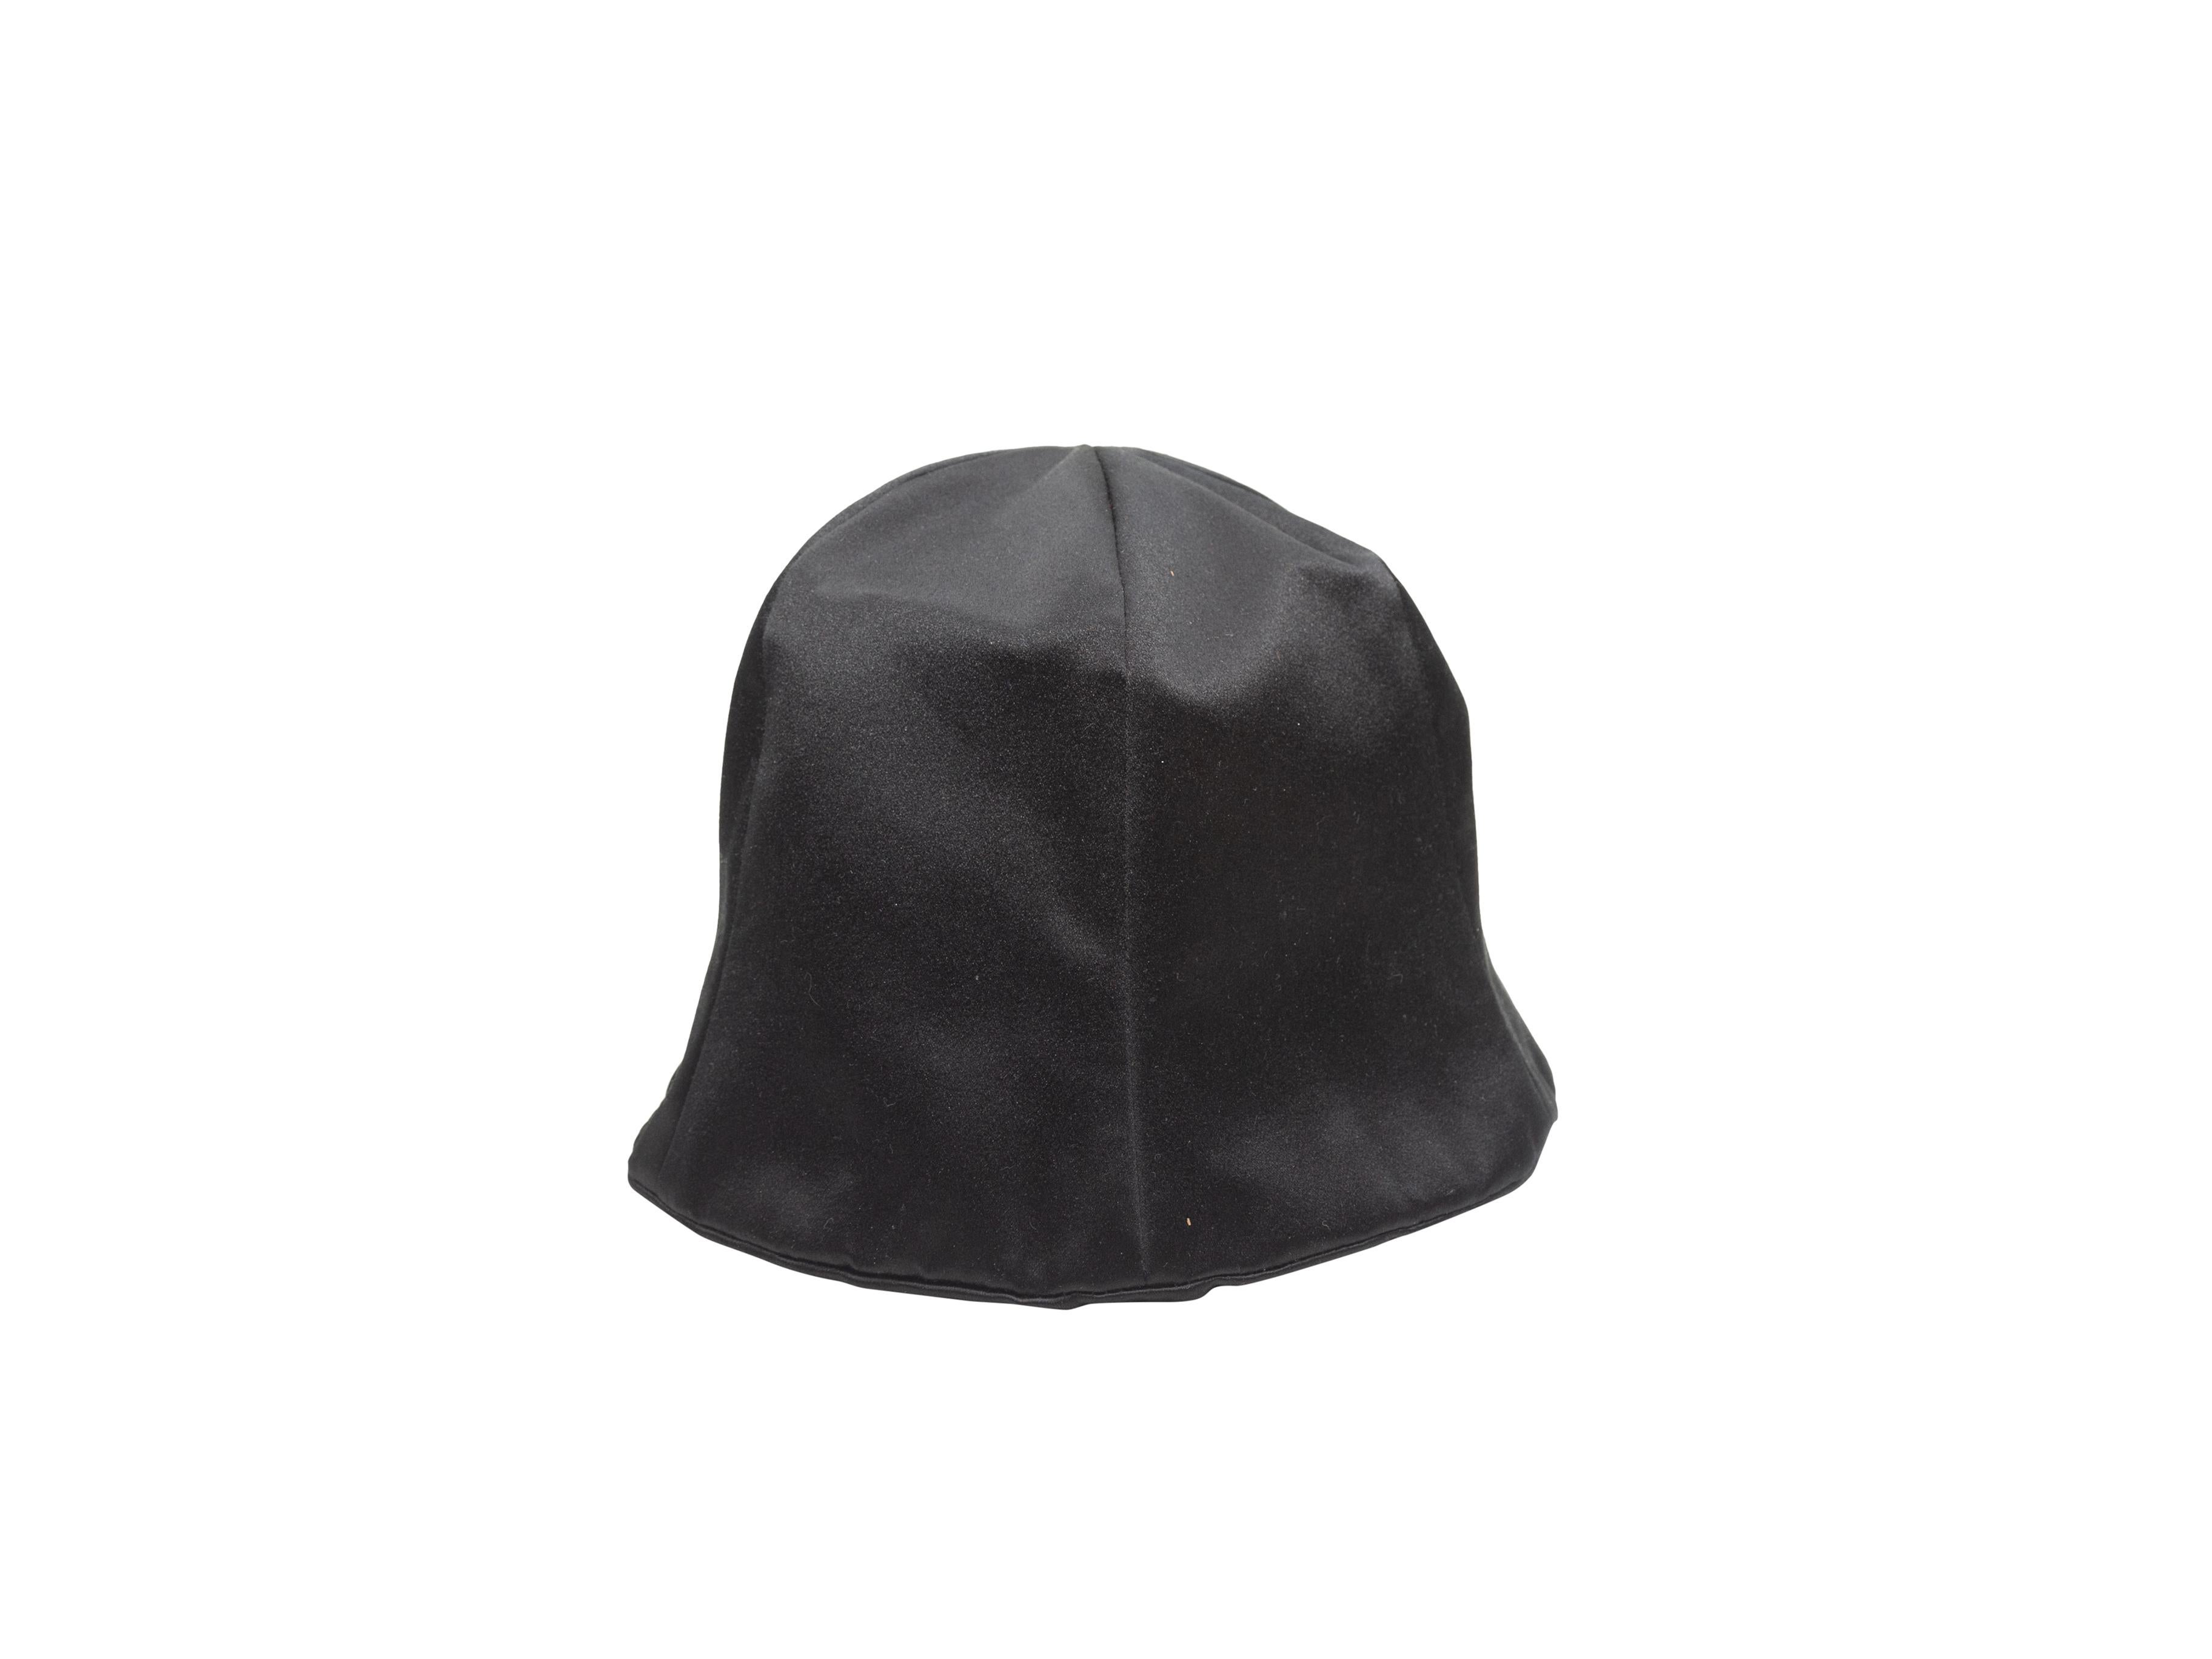 Product details: Black satin brimless bucket hat by Prada. 8.5